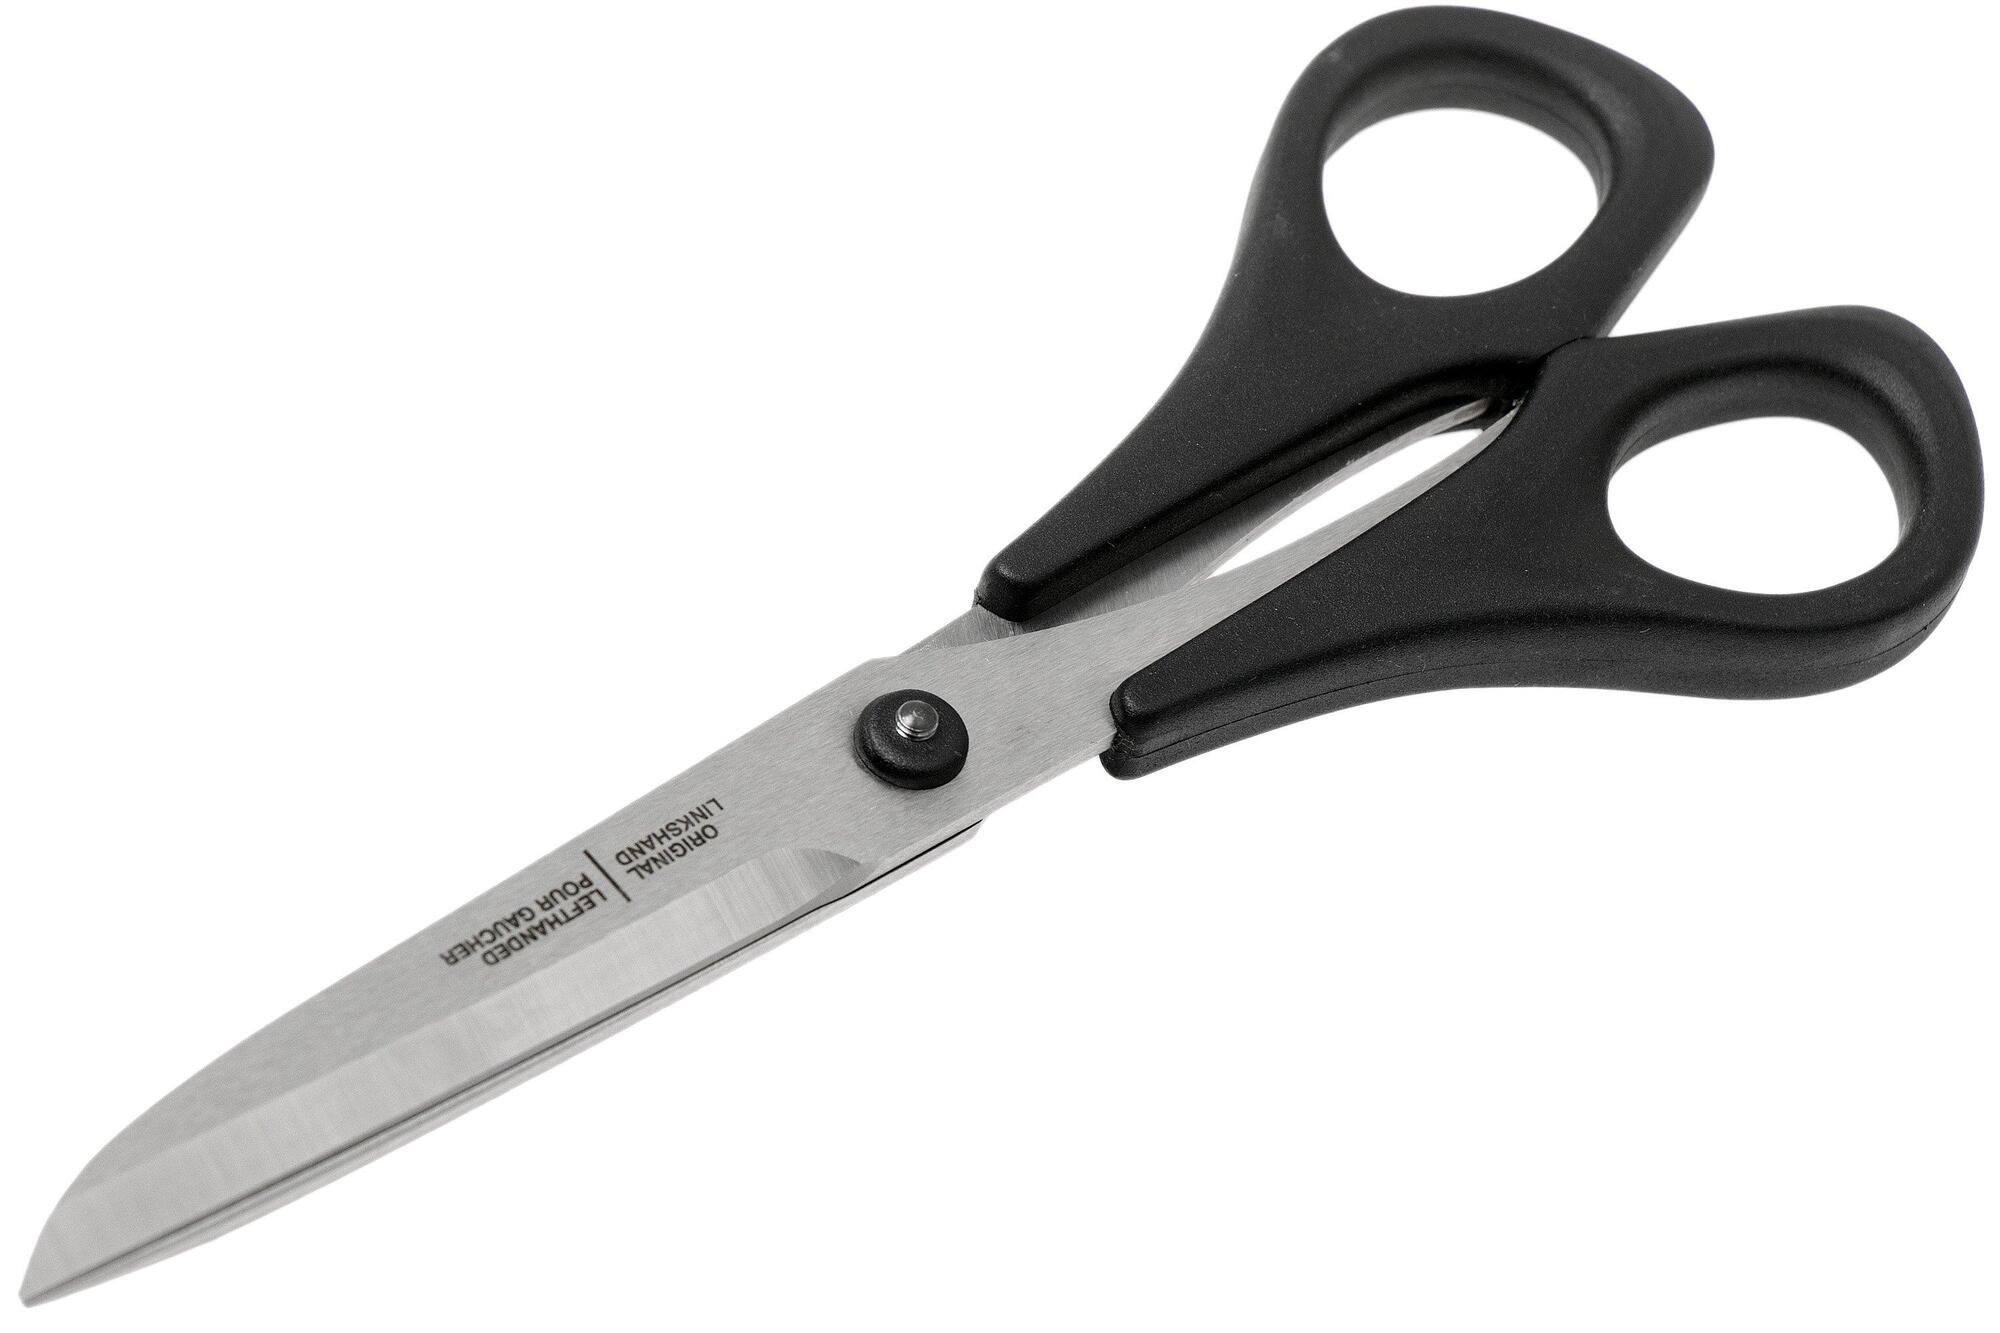 Victorinox France 8.1014.18, 18 cm household scissors